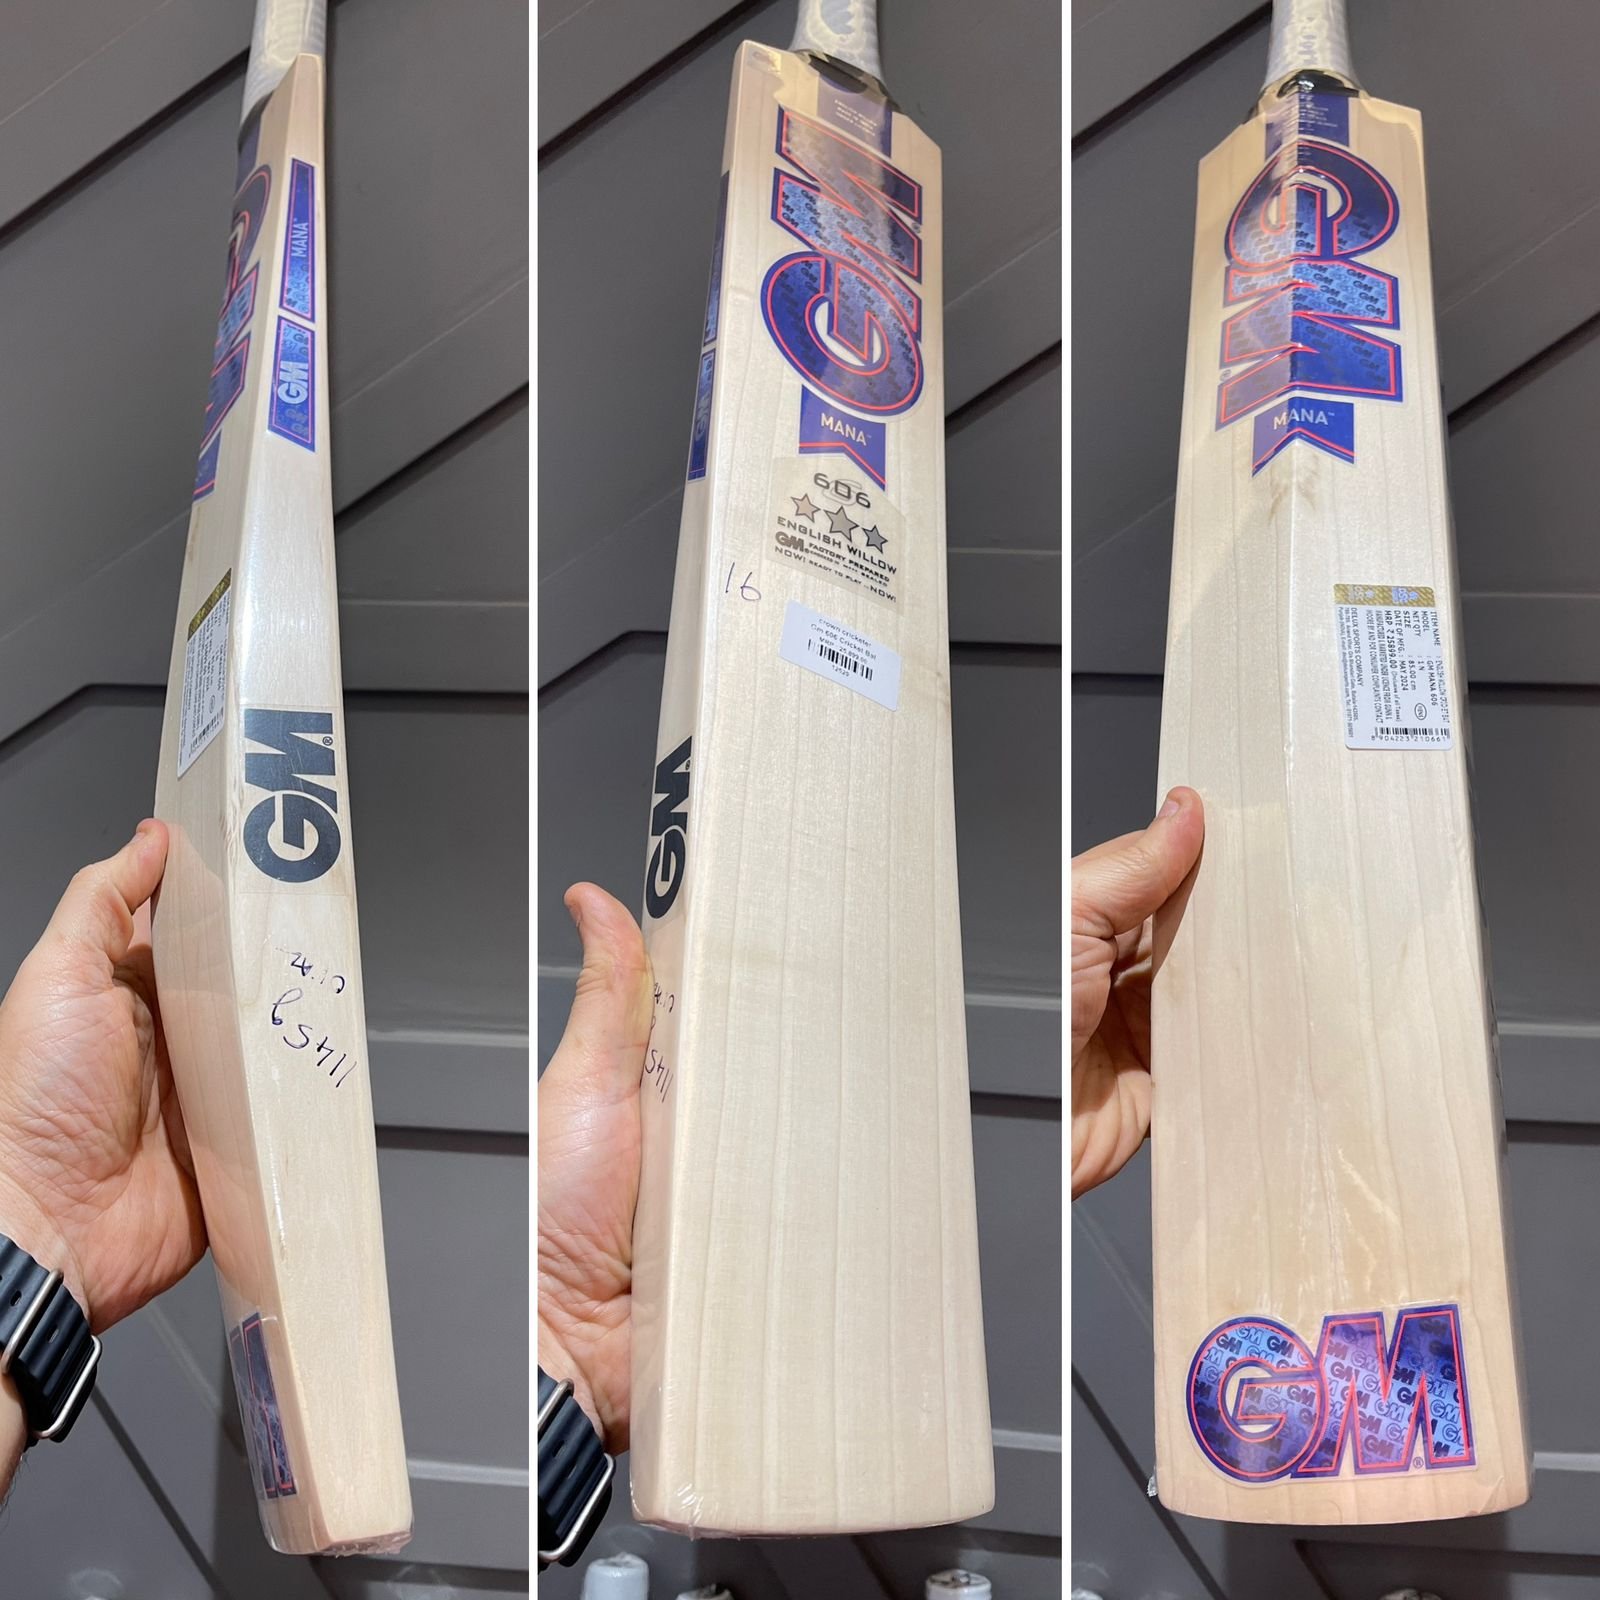 GM Mana 606 Cricket Bat